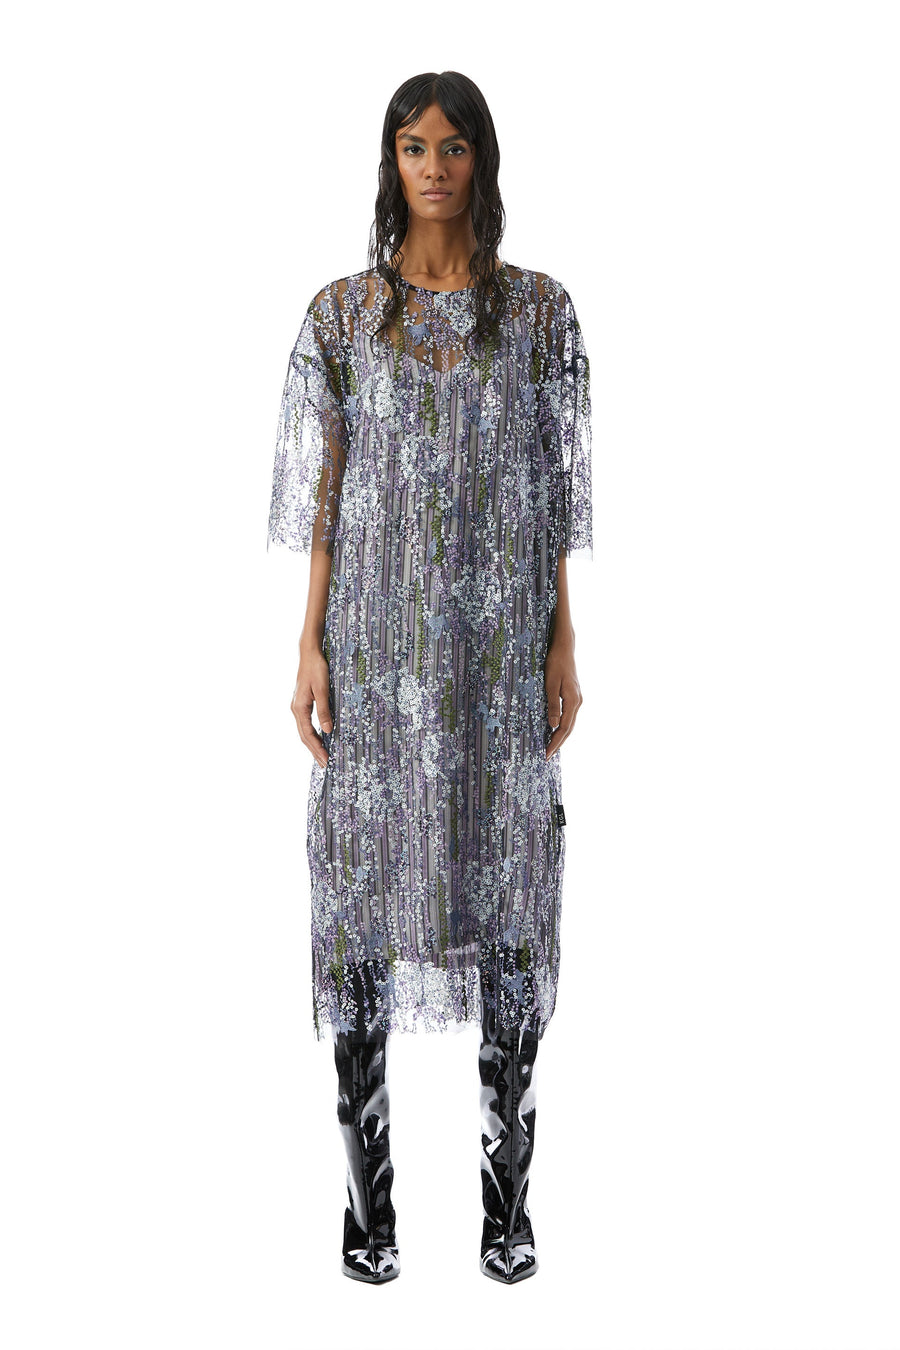 'Ametrine' Embellished Dress - Kanika Goyal Label